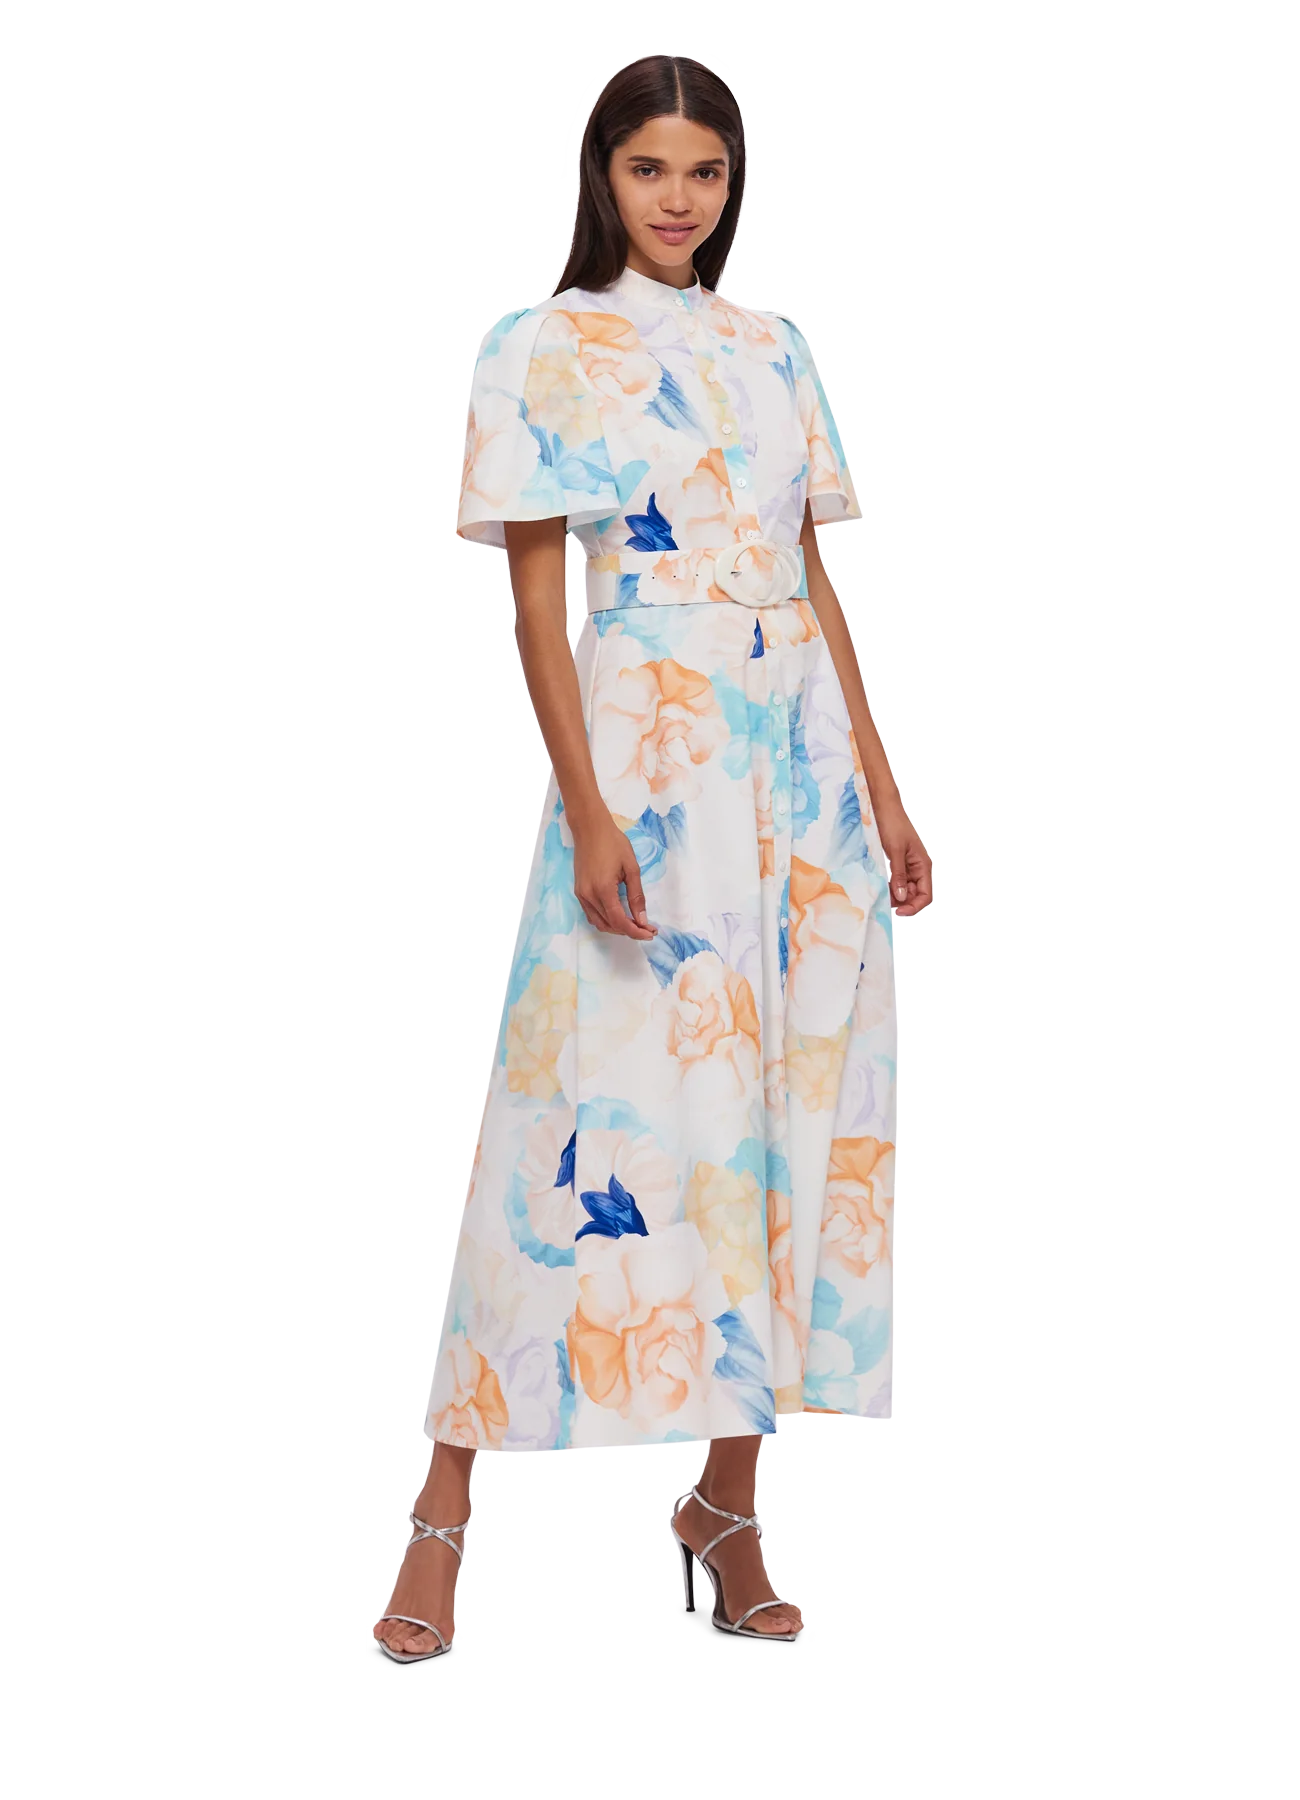 Bianca Short Sleeve Midi Dress - Rosebud Print in Cream